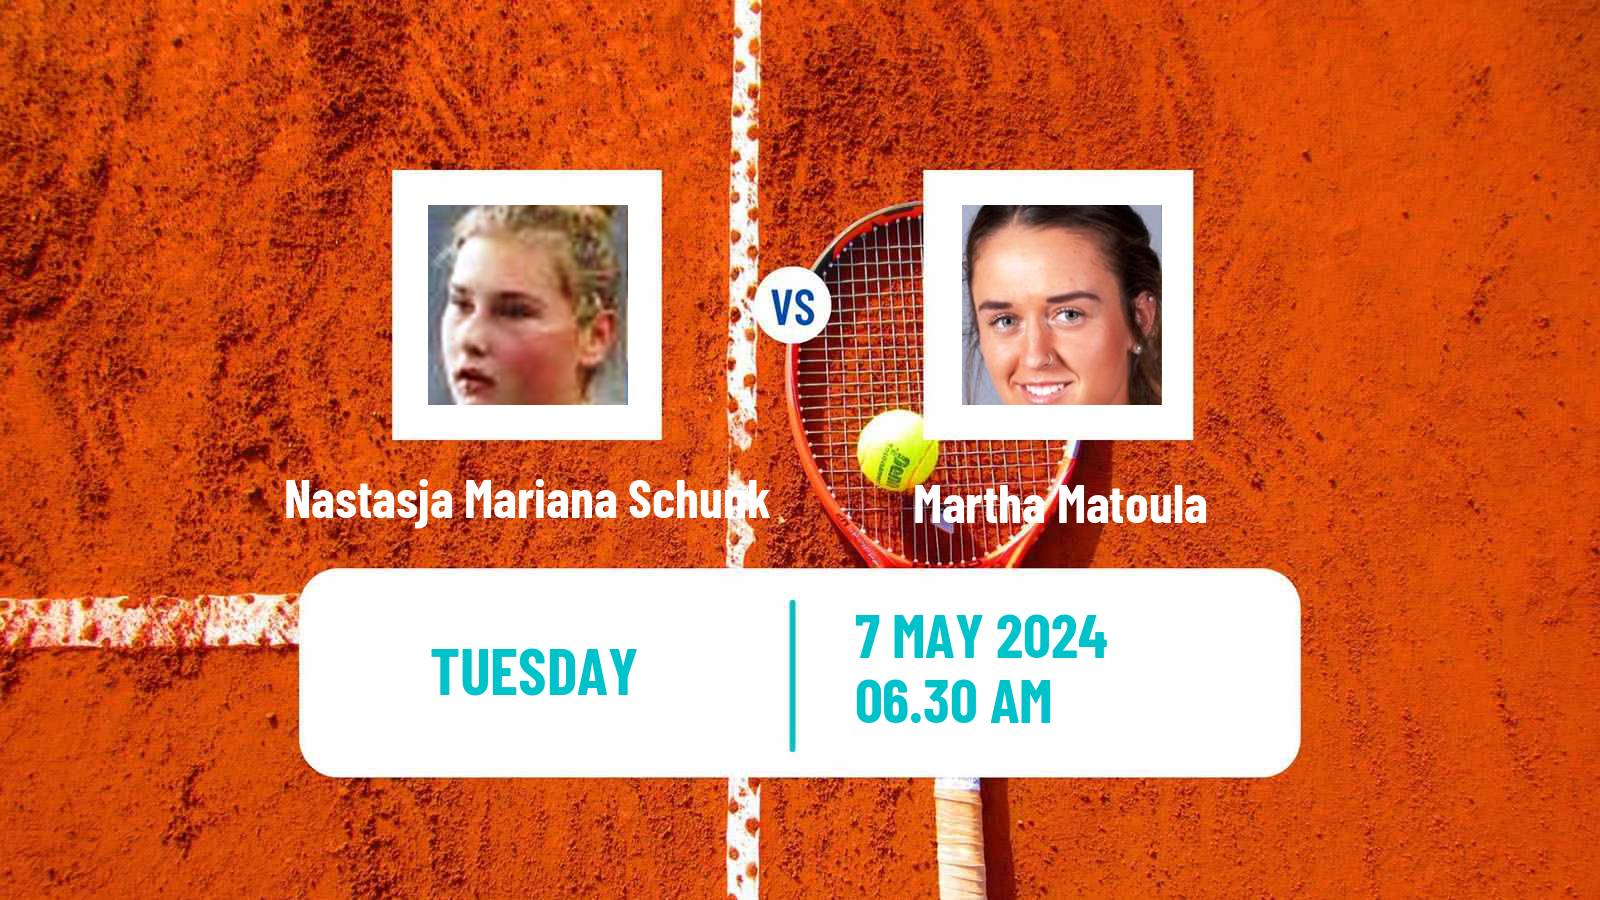 Tennis ITF W35 Bastad Women Nastasja Mariana Schunk - Martha Matoula